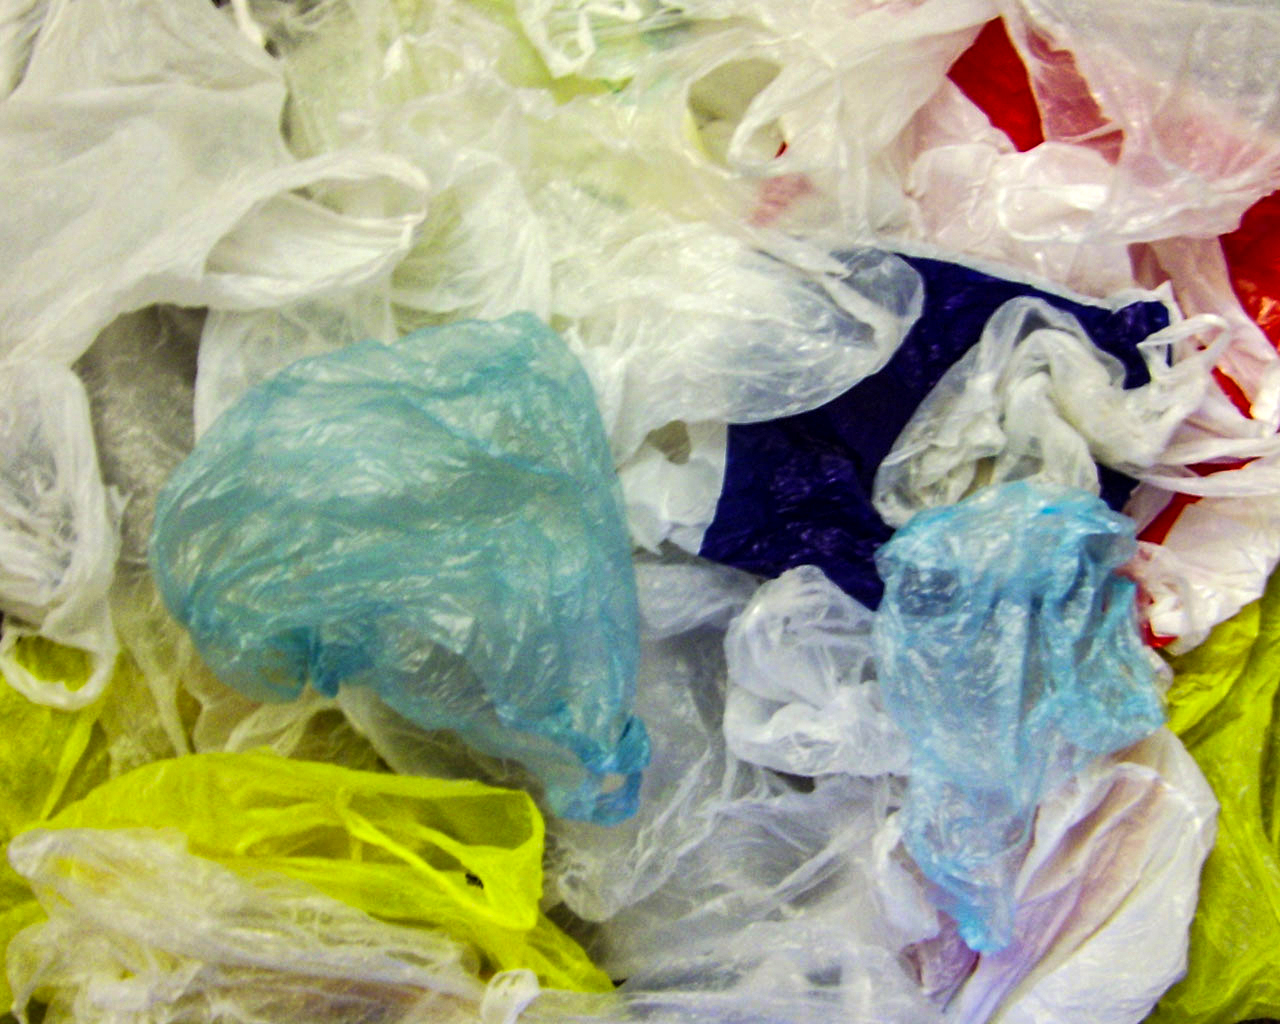 Plastic bag waste -- credit wikicommons